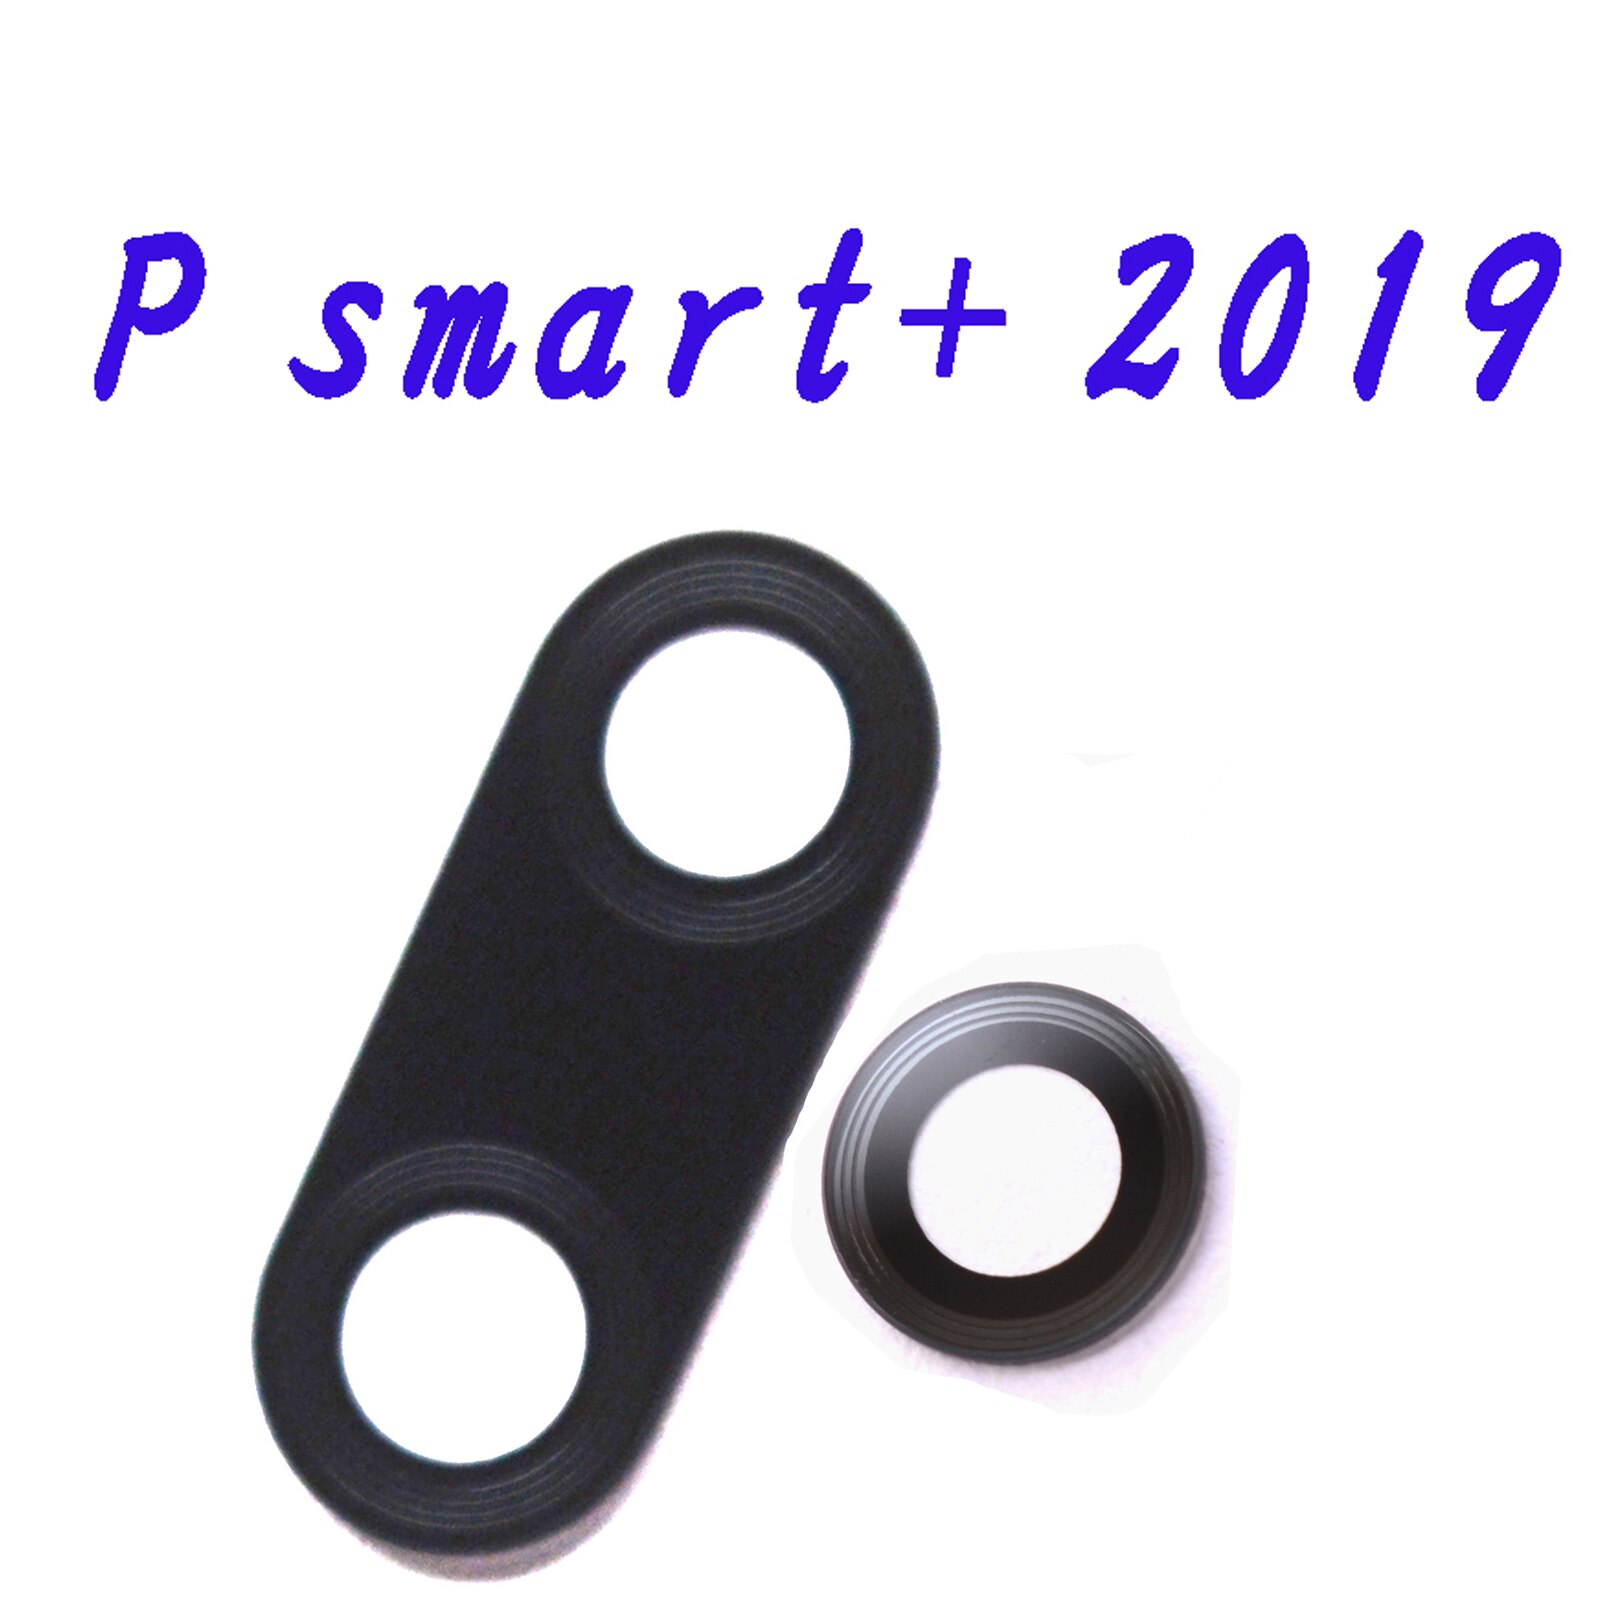 For p smart pro alkuperäinen takakameran lasilinssi huaweille p smart + p smart +: P smart plus 2019